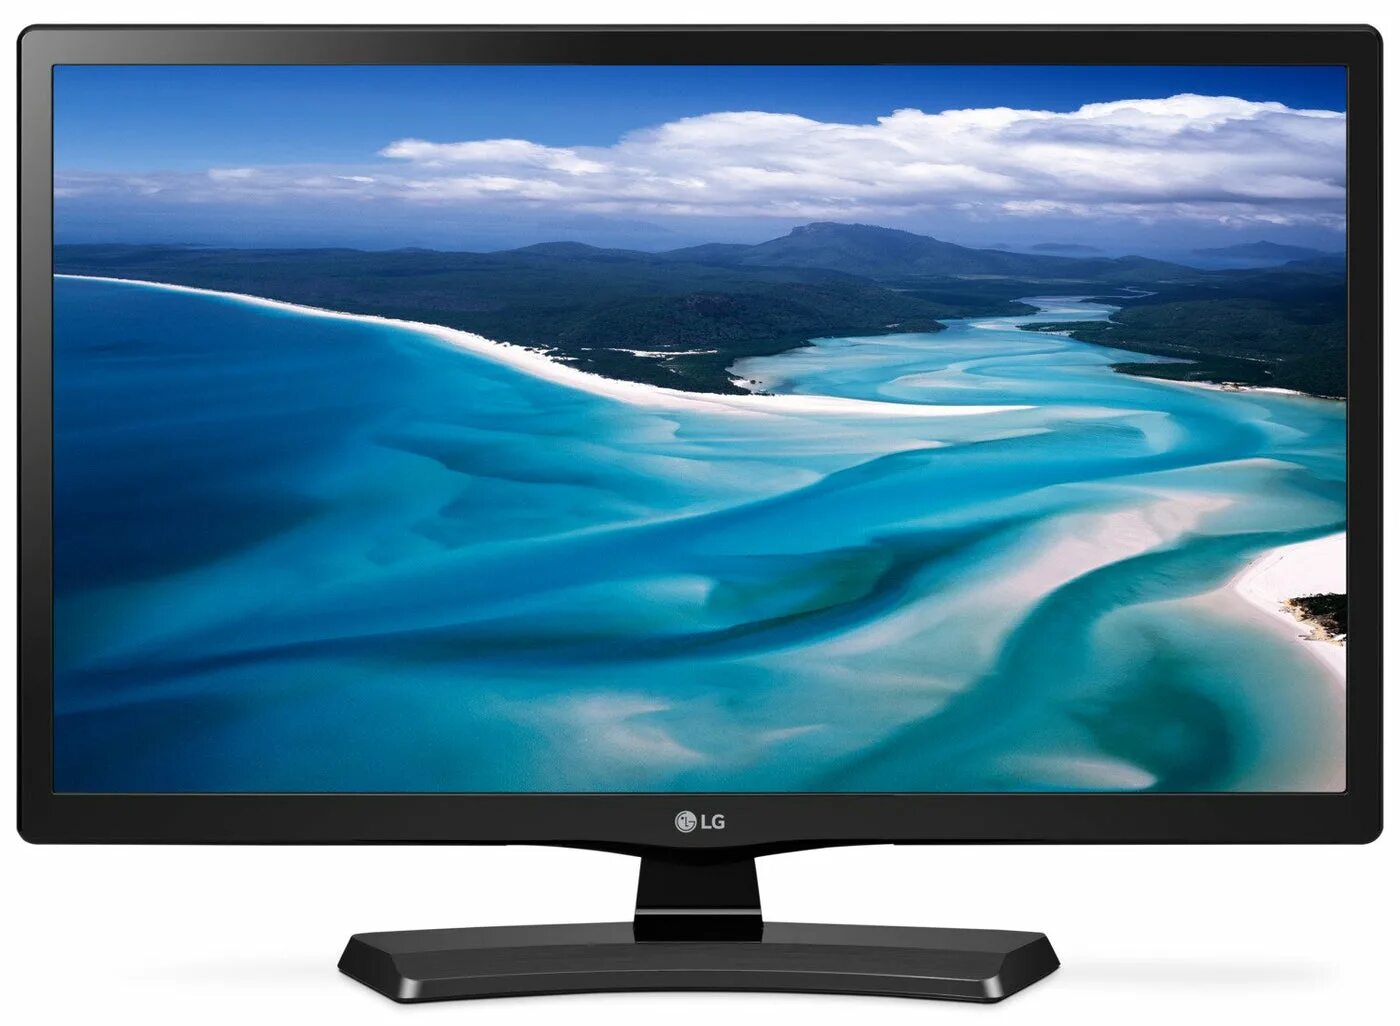 Телевизоры 24 смарт рейтинг. LG 24 Smart TV. Телевизор LG 24lb540u. Samsung 24 p2470hd. Led телевизор 24 LG 24lh451ueac.